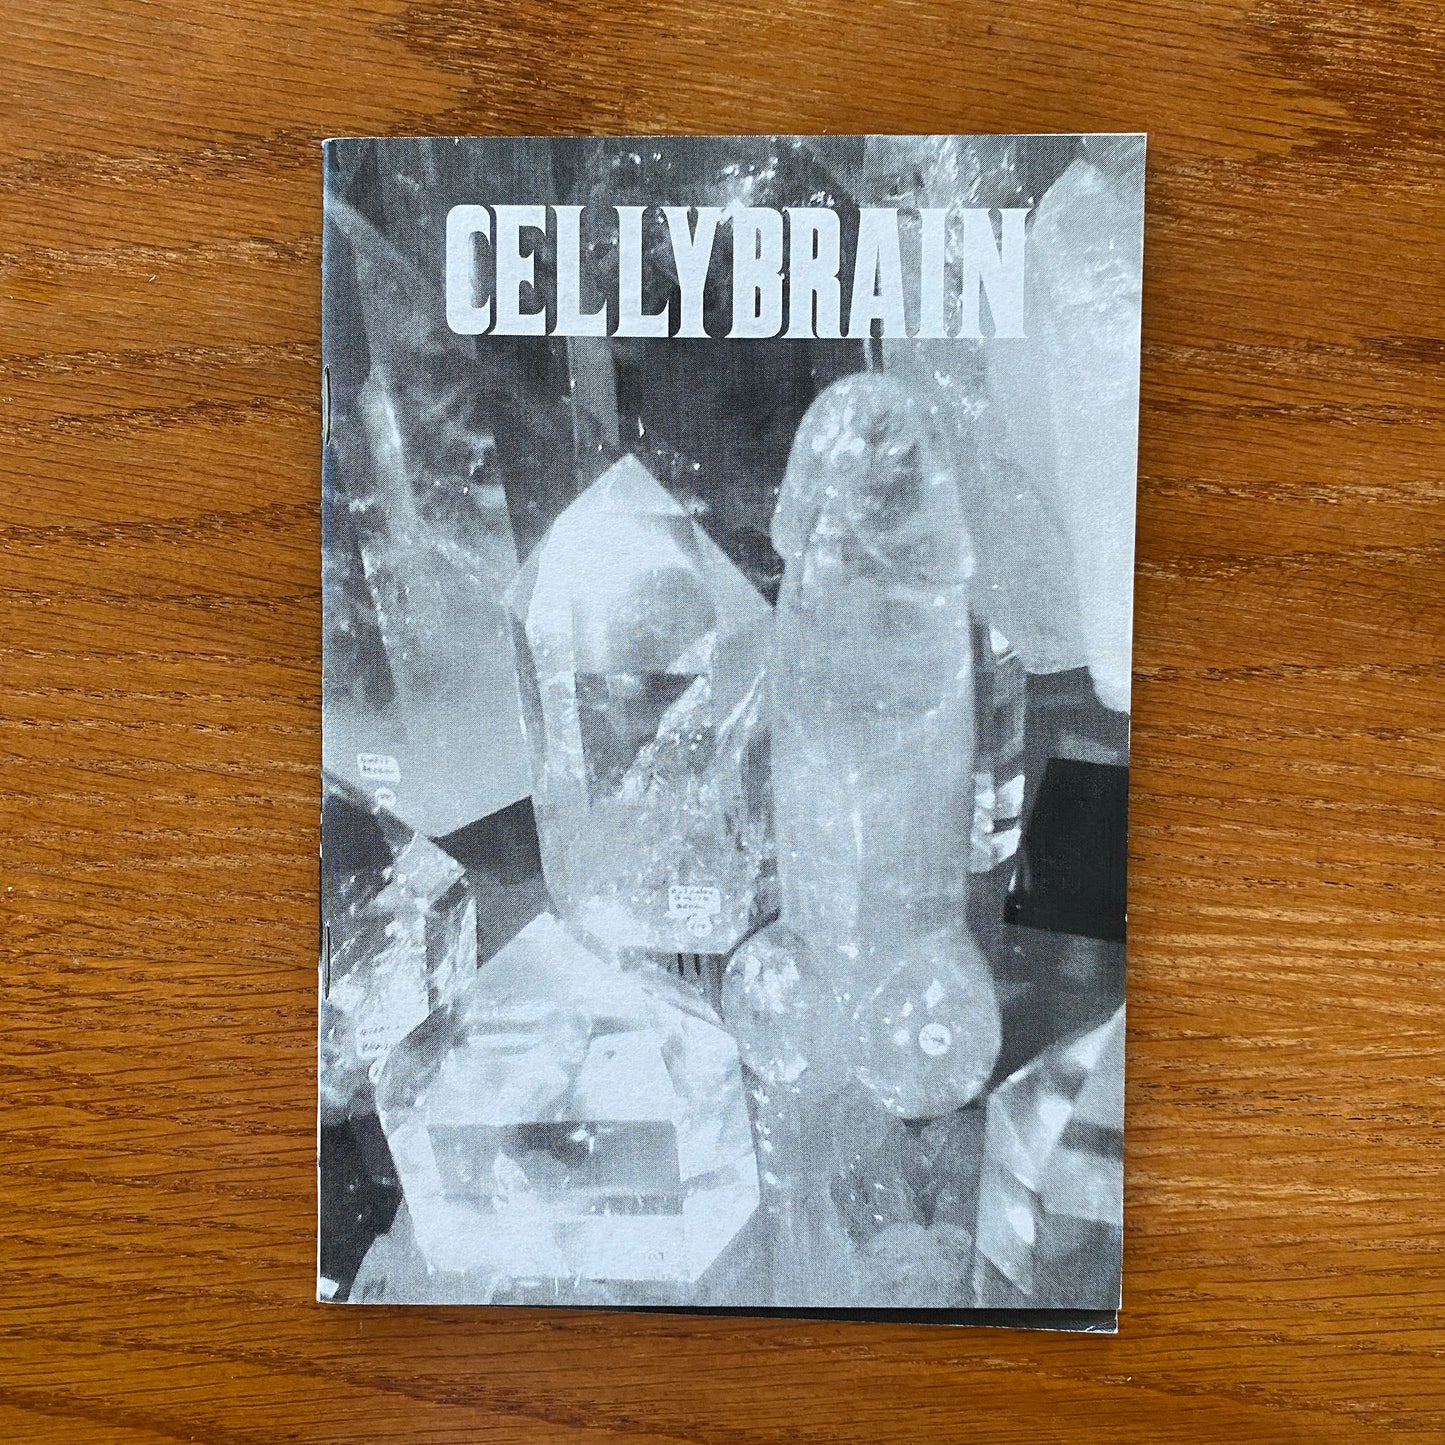 The Best of Celly Brain Vol. 2 - Hamburger Eyes